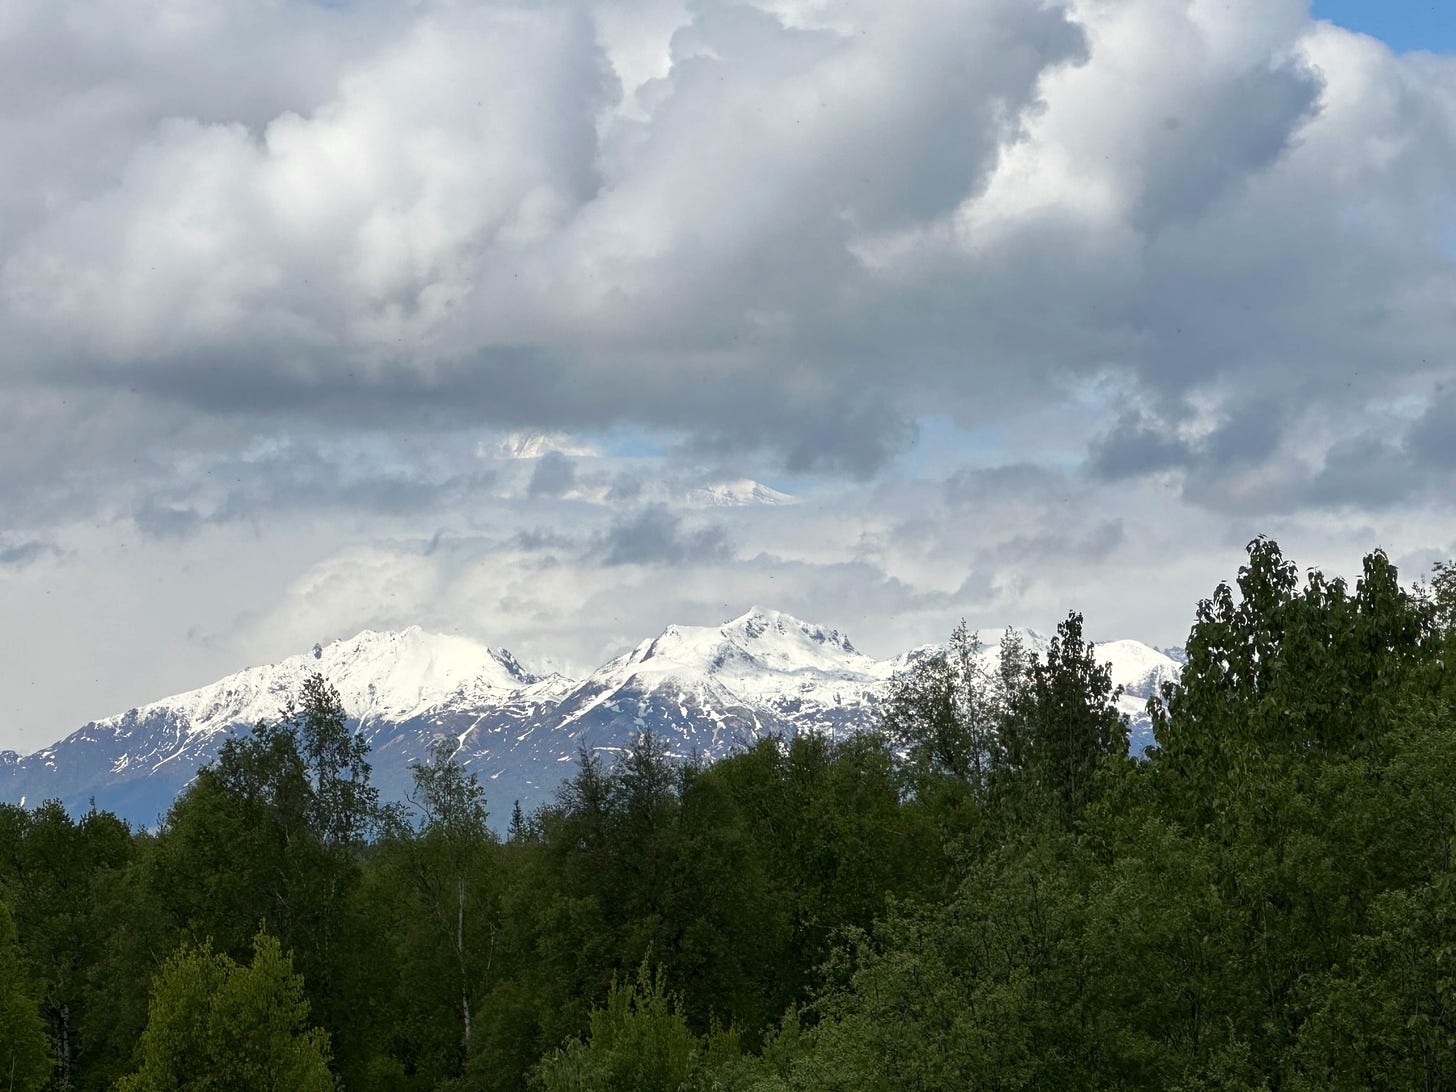 Mountain range with peak of Denali showing through the clouds.